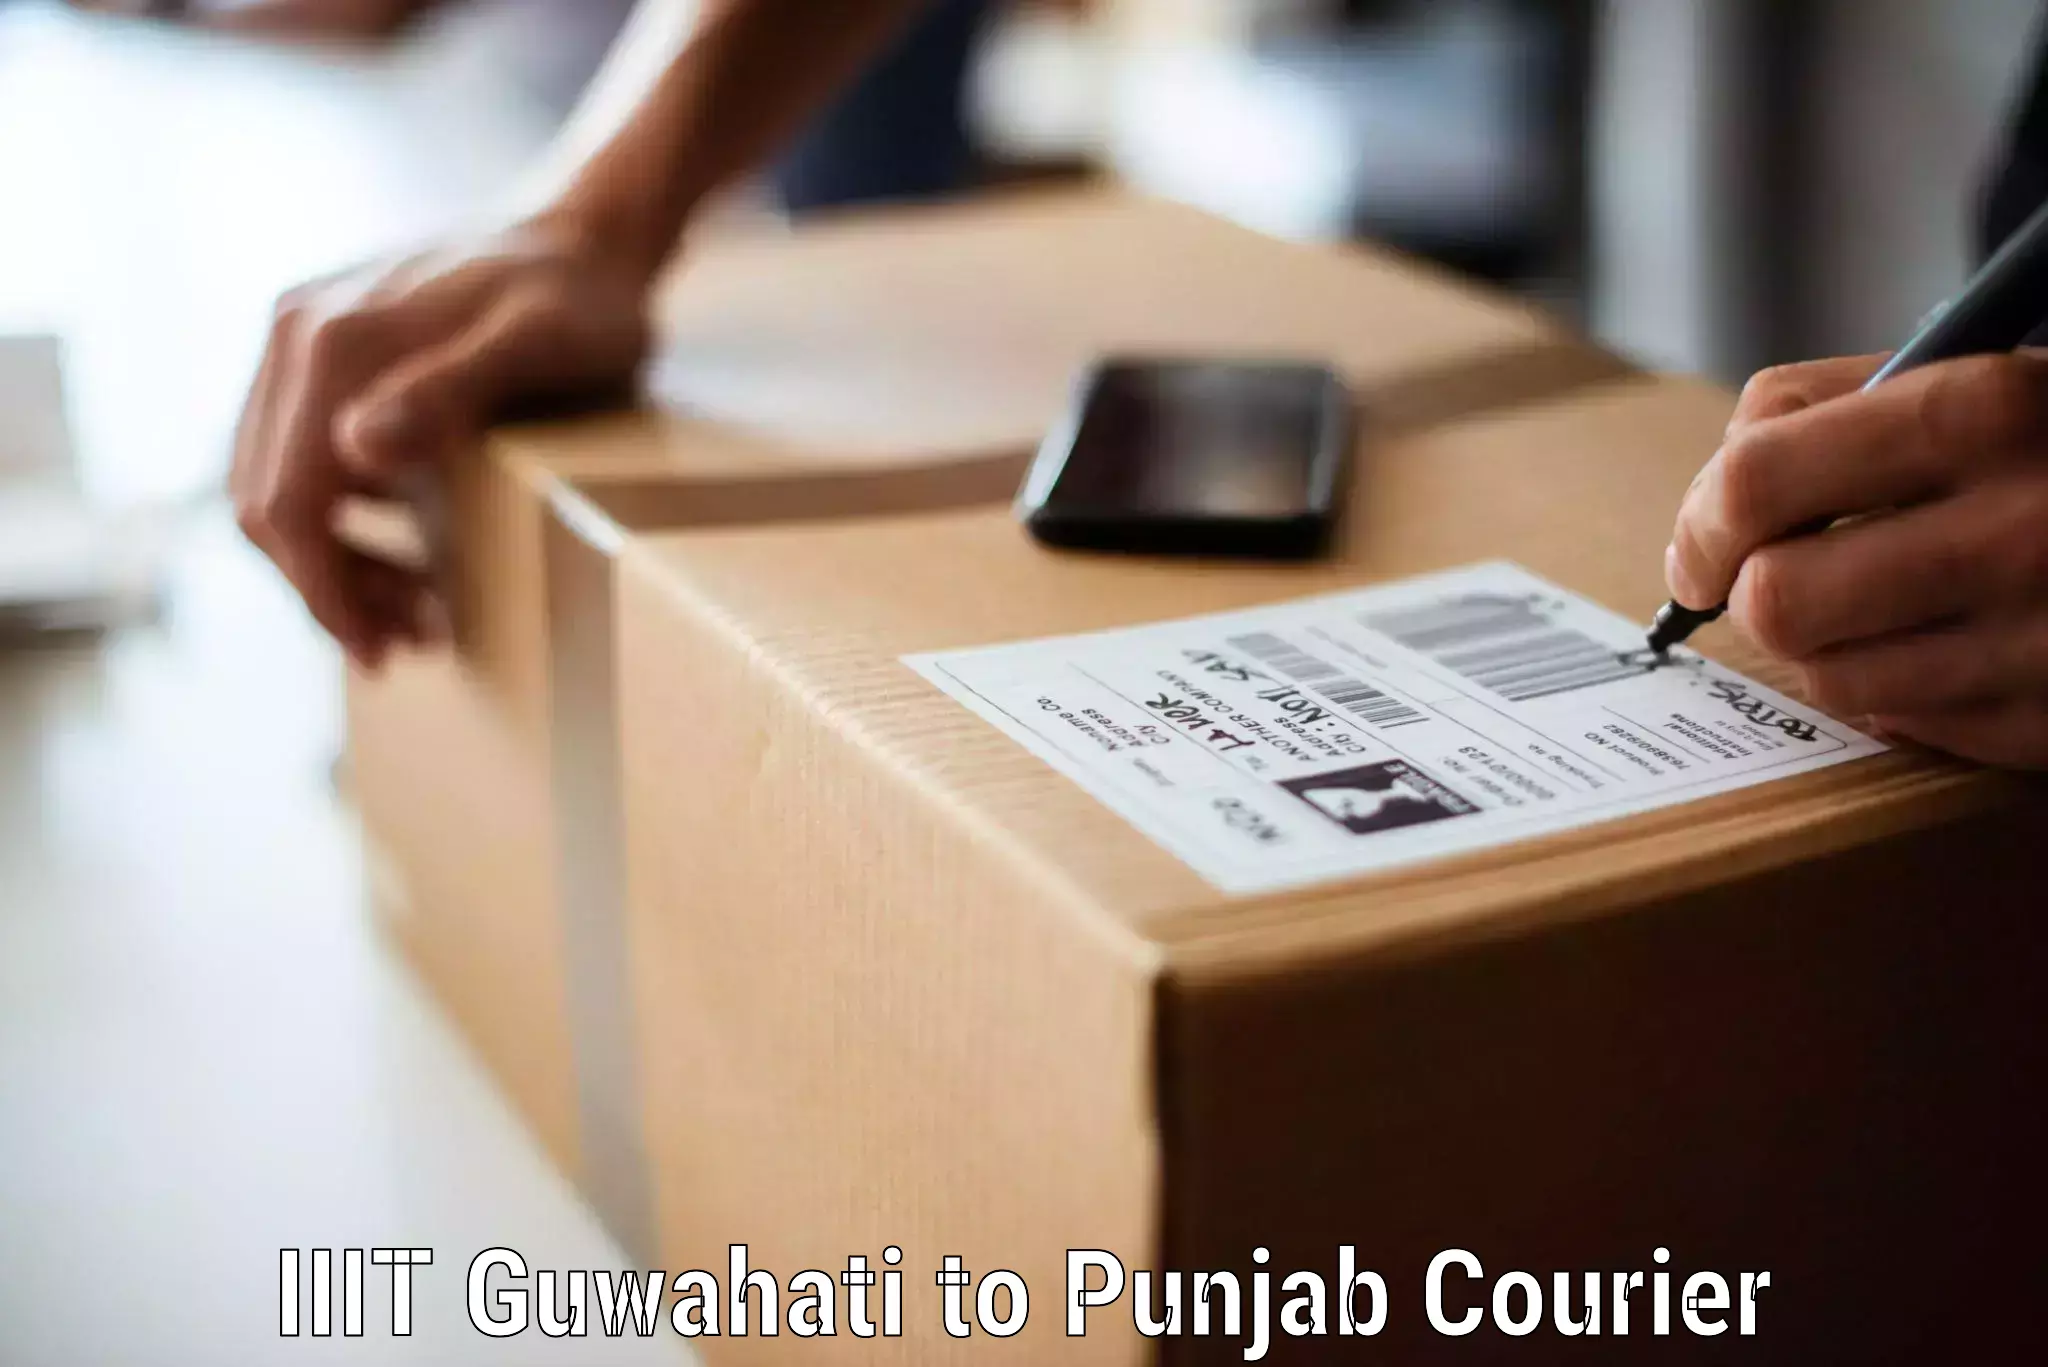 Professional packing and transport IIIT Guwahati to Punjab